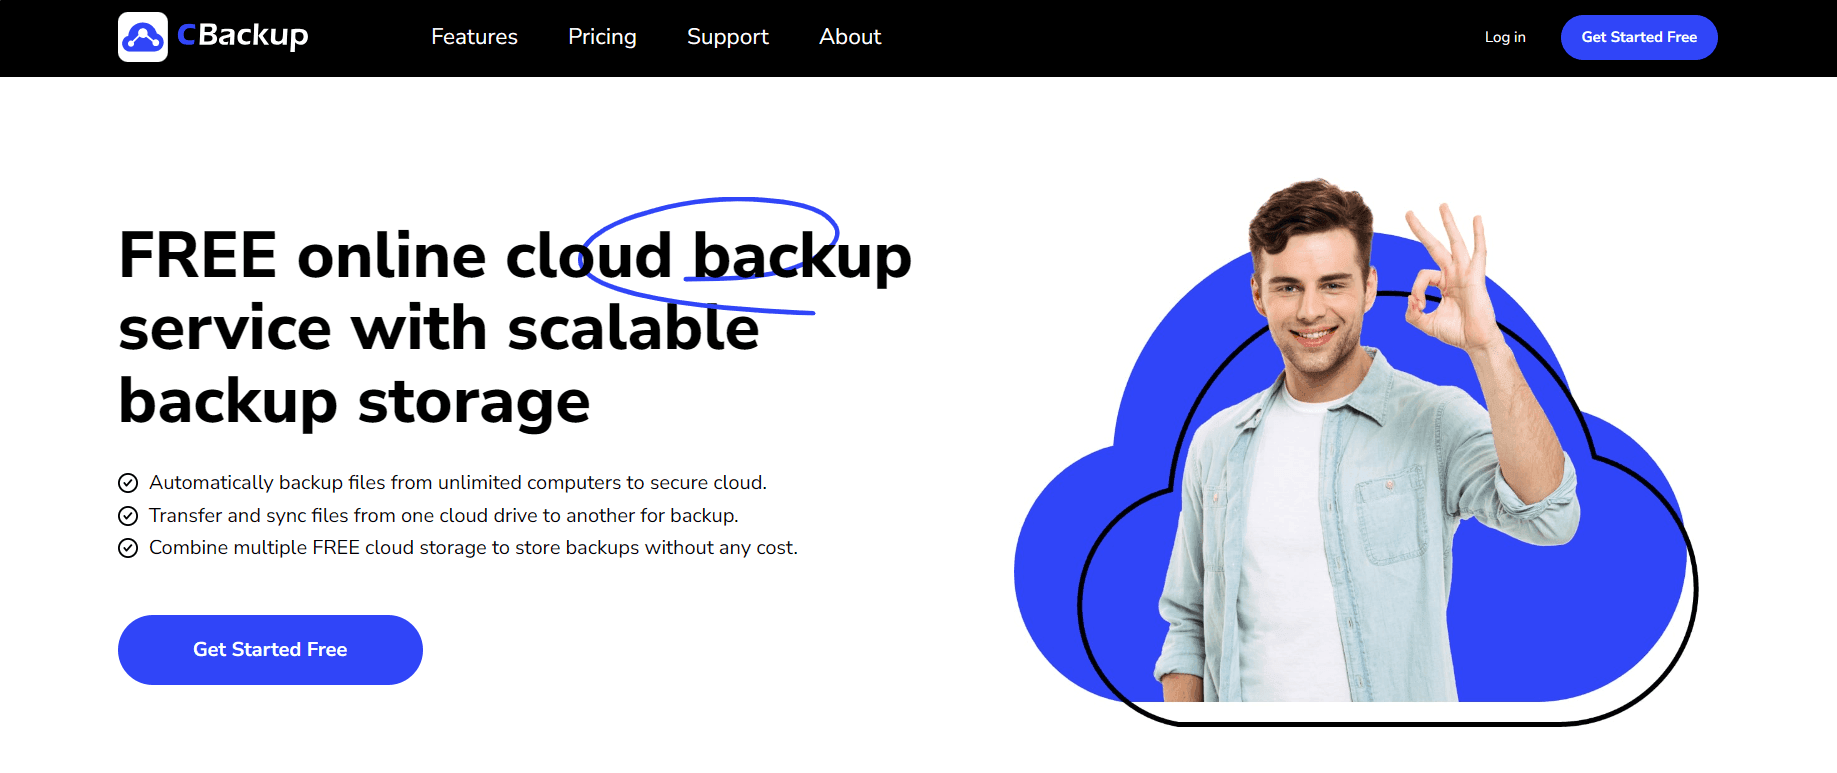 Cbackup= Main Page